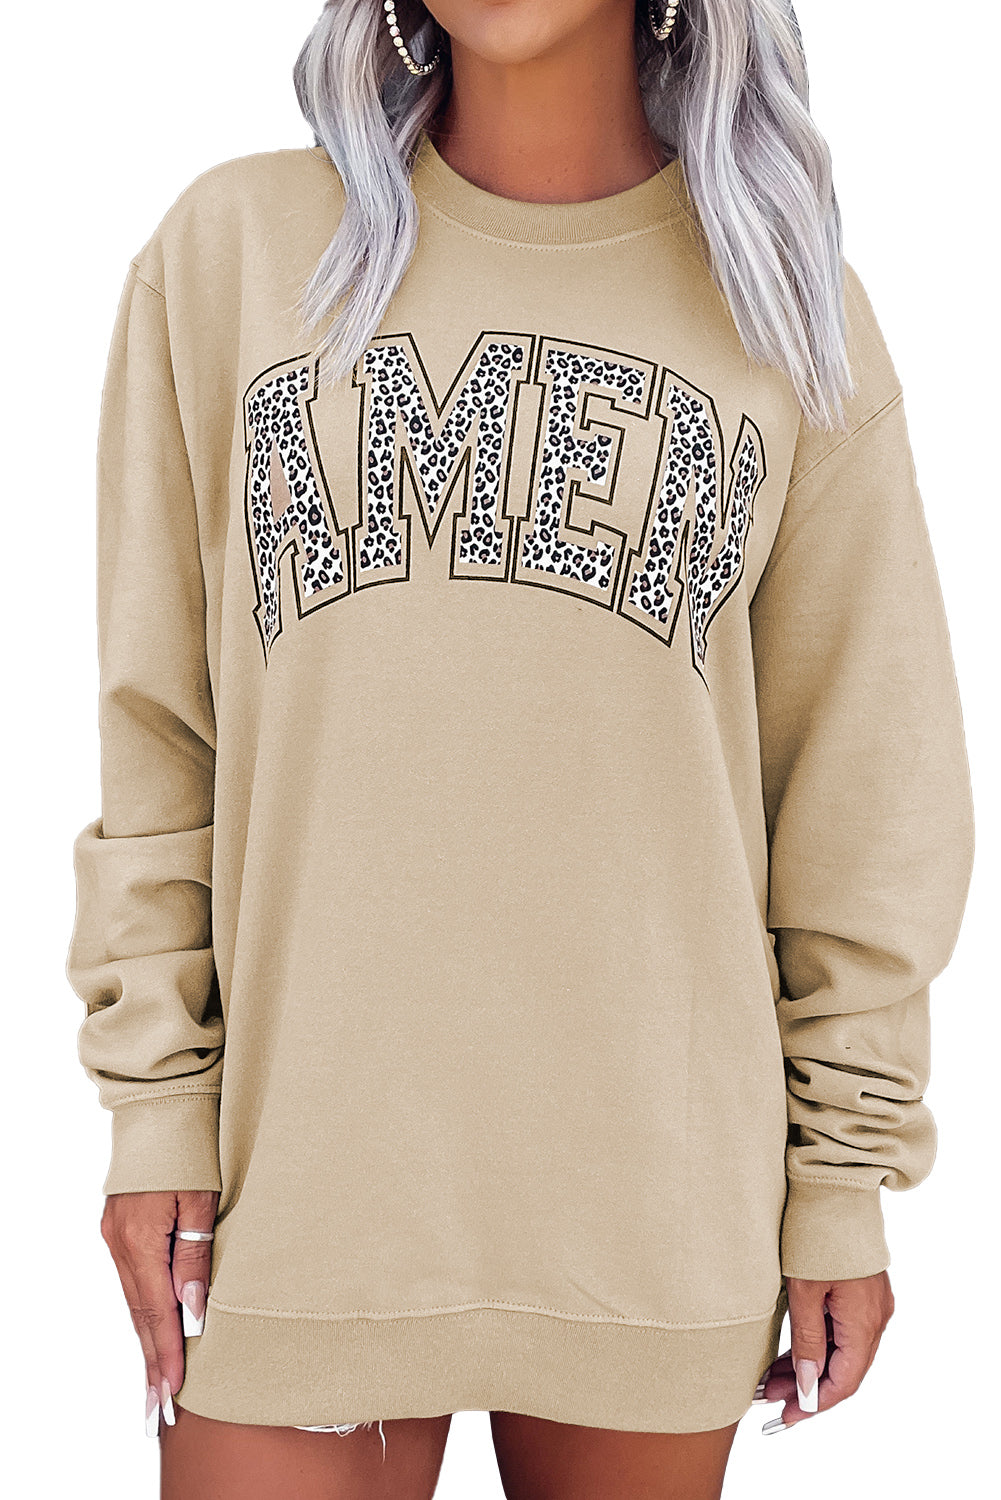 Khaki AMEN Leopard Letter Print Oversized Pullover Sweatshirt Sweatshirts & Hoodies JT's Designer Fashion